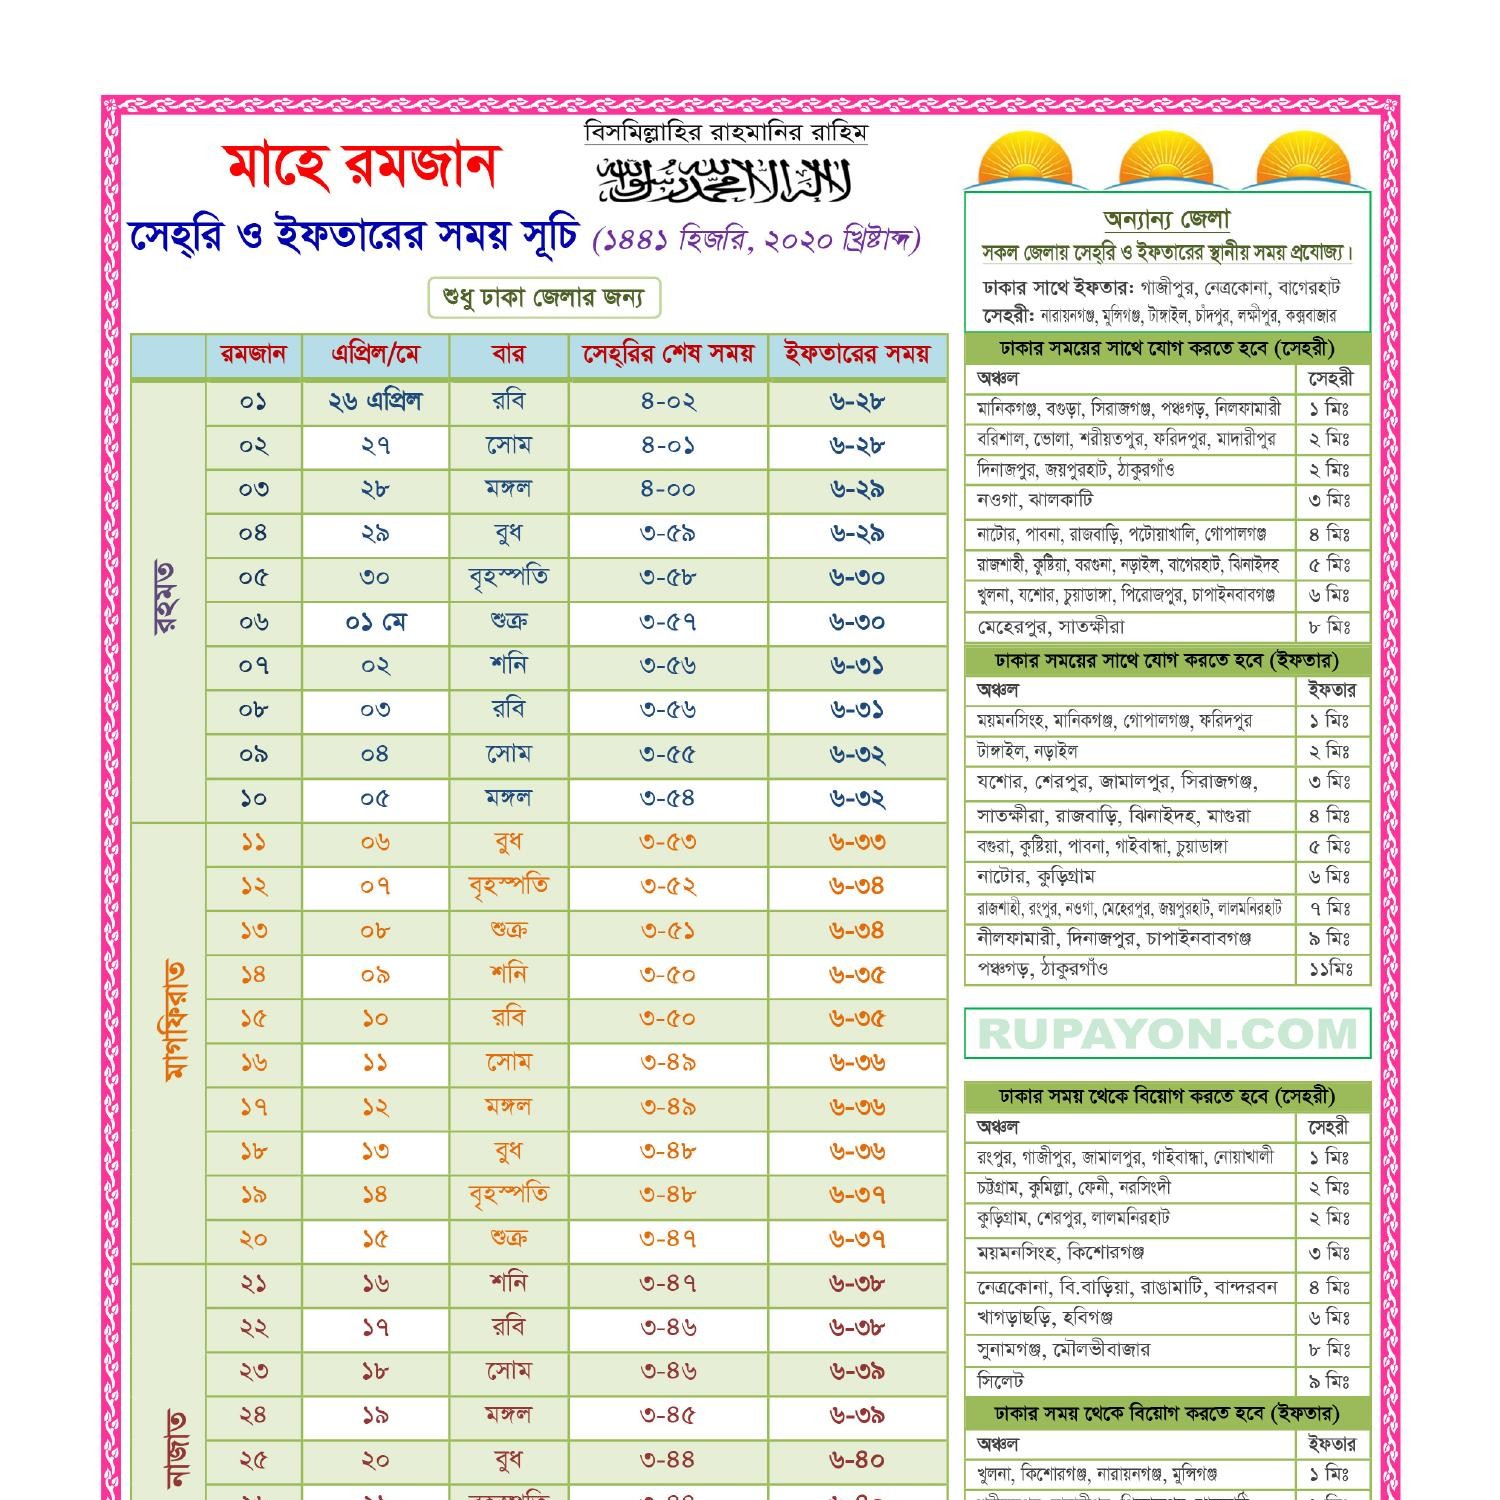 ramadan-calendar-bangladesh-2020-pdf-docdroid